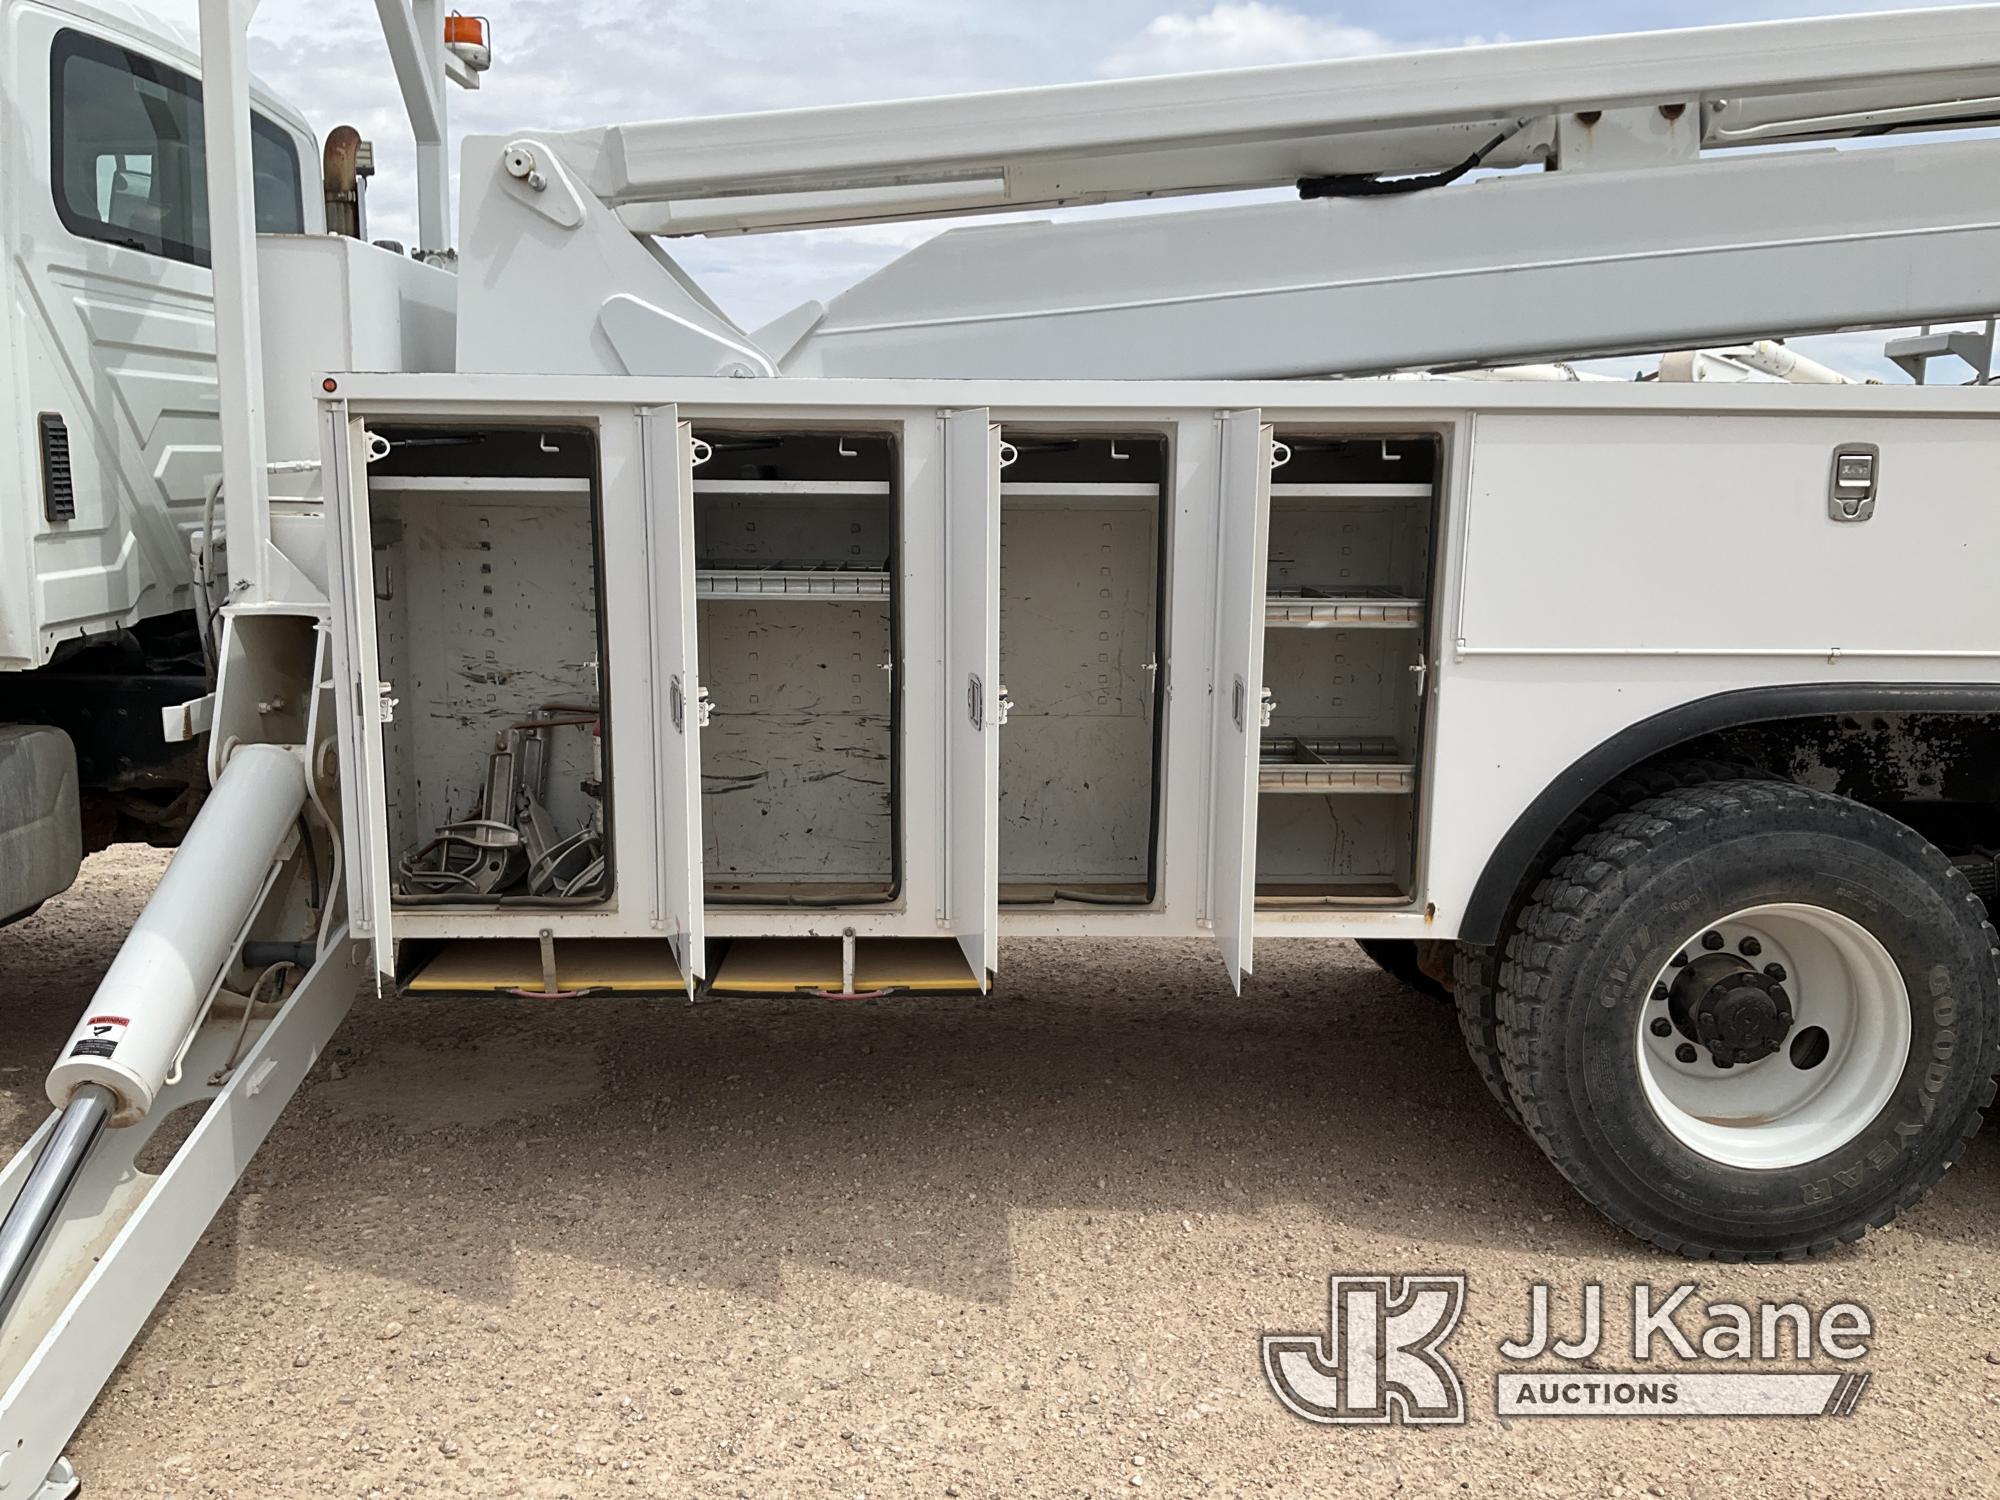 (Odessa, TX) Altec A77T-E93, Articulating & Telescopic Material Handling Elevator Bucket Truck rear